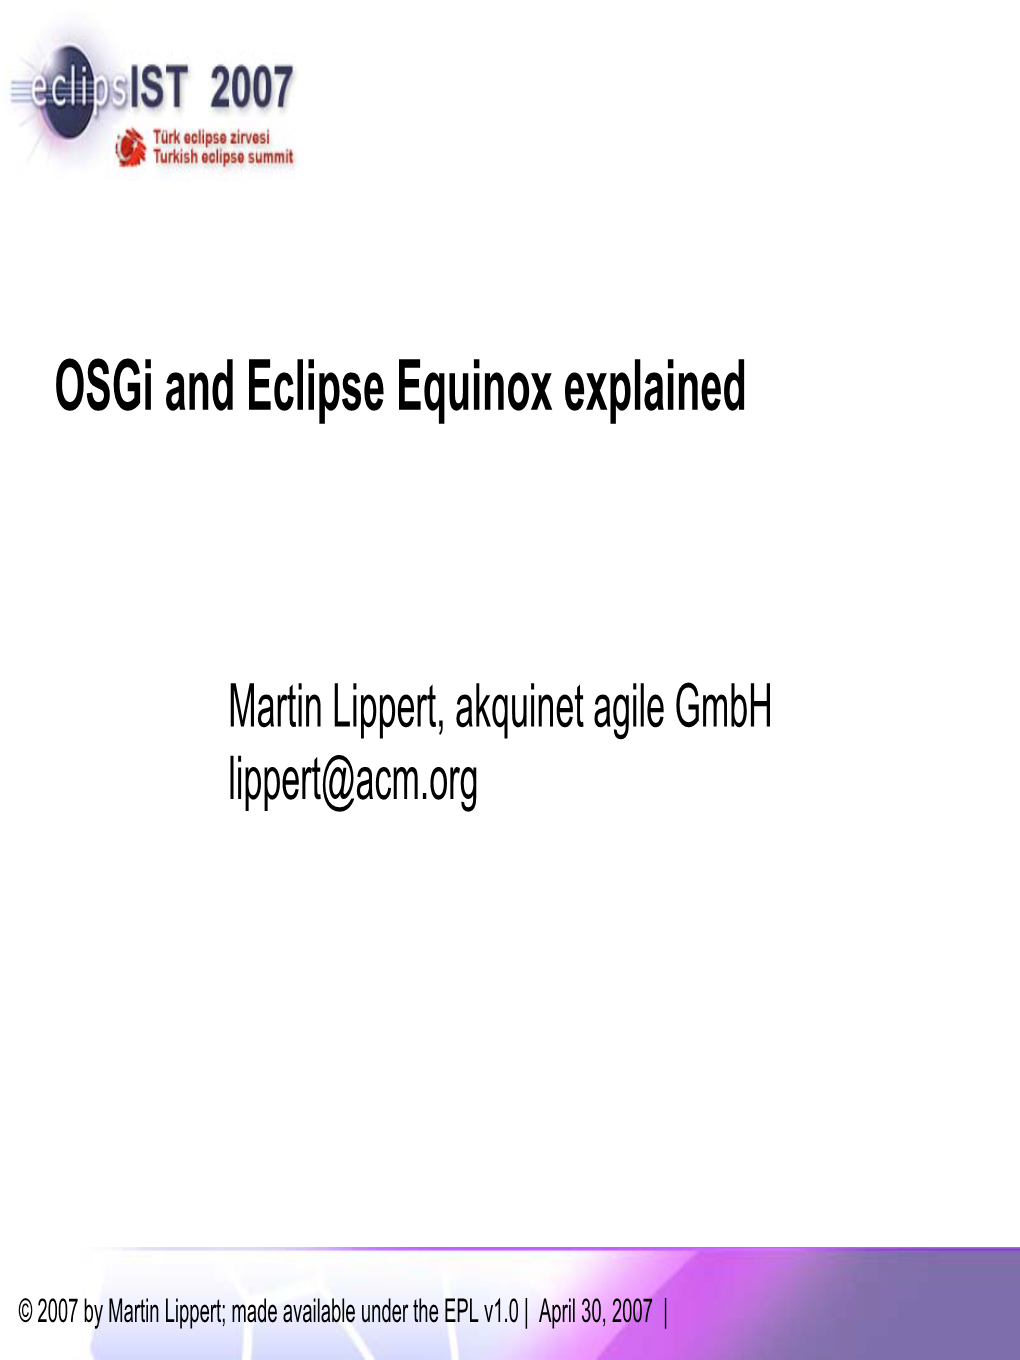 Osgi and Eclipse Equinox Explained